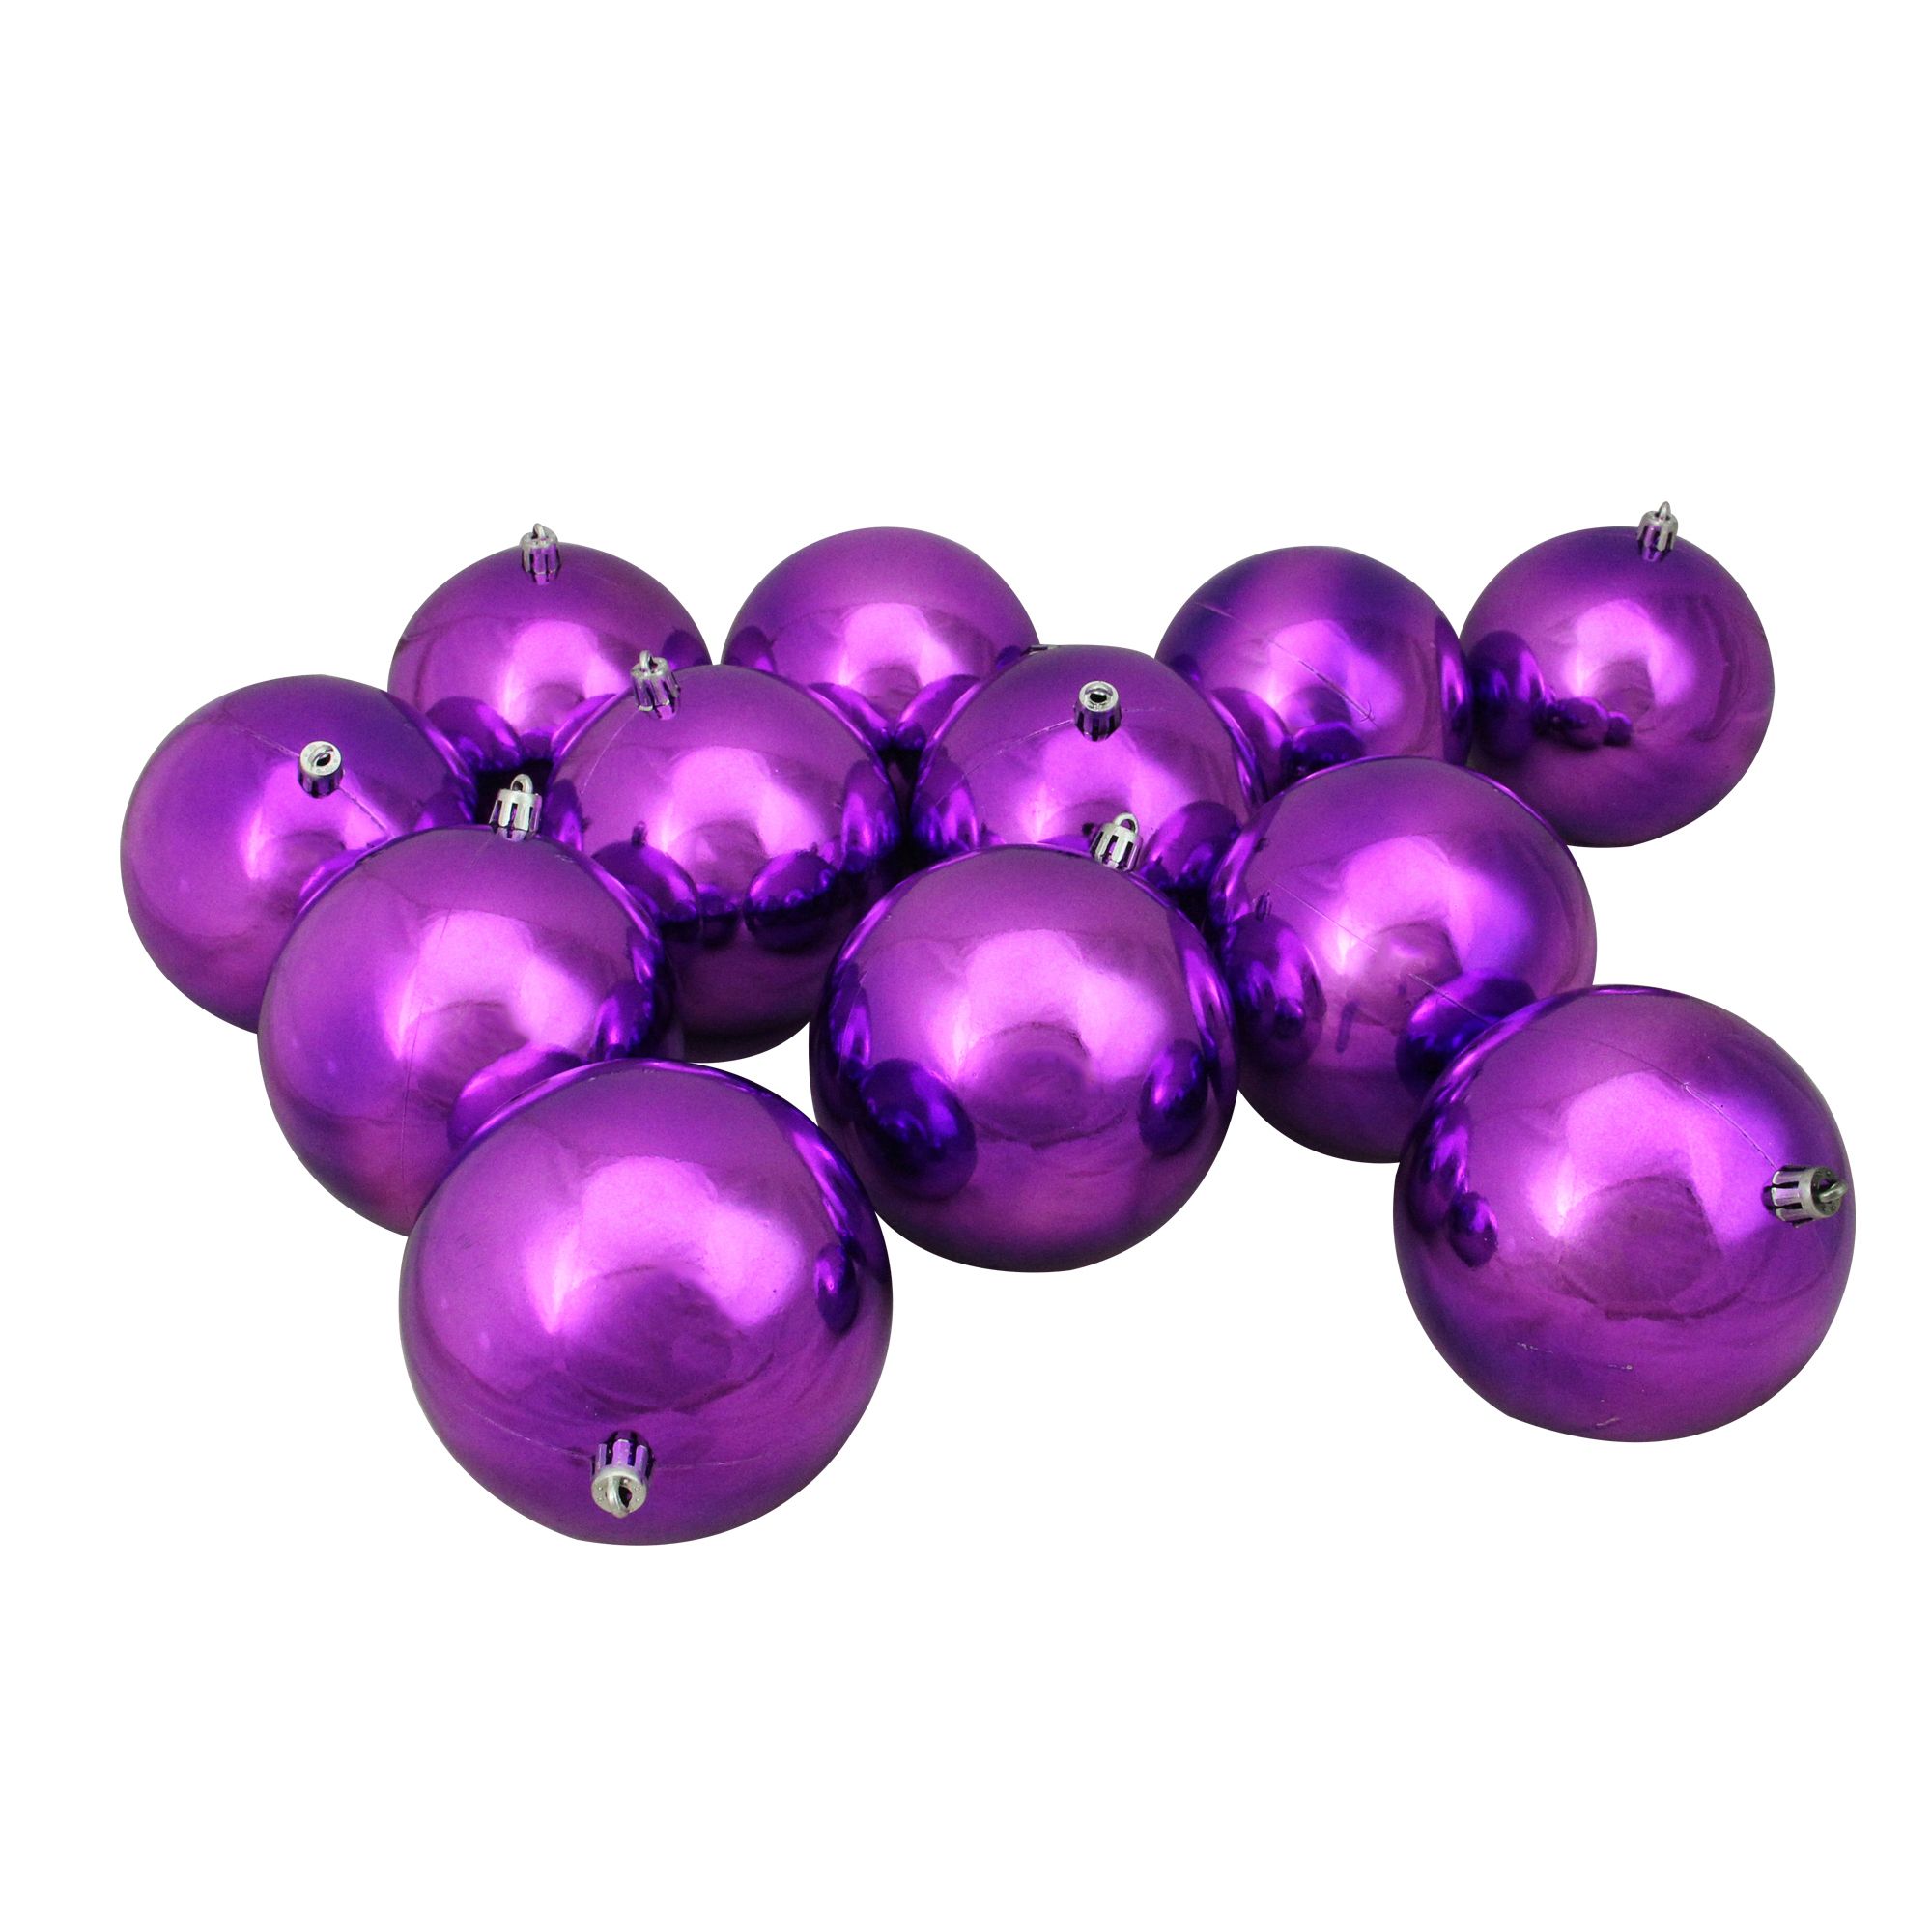 Northlight 4&quot; Shatterproof Shiny Christmas Ball Ornaments, 12 ct. - Purple